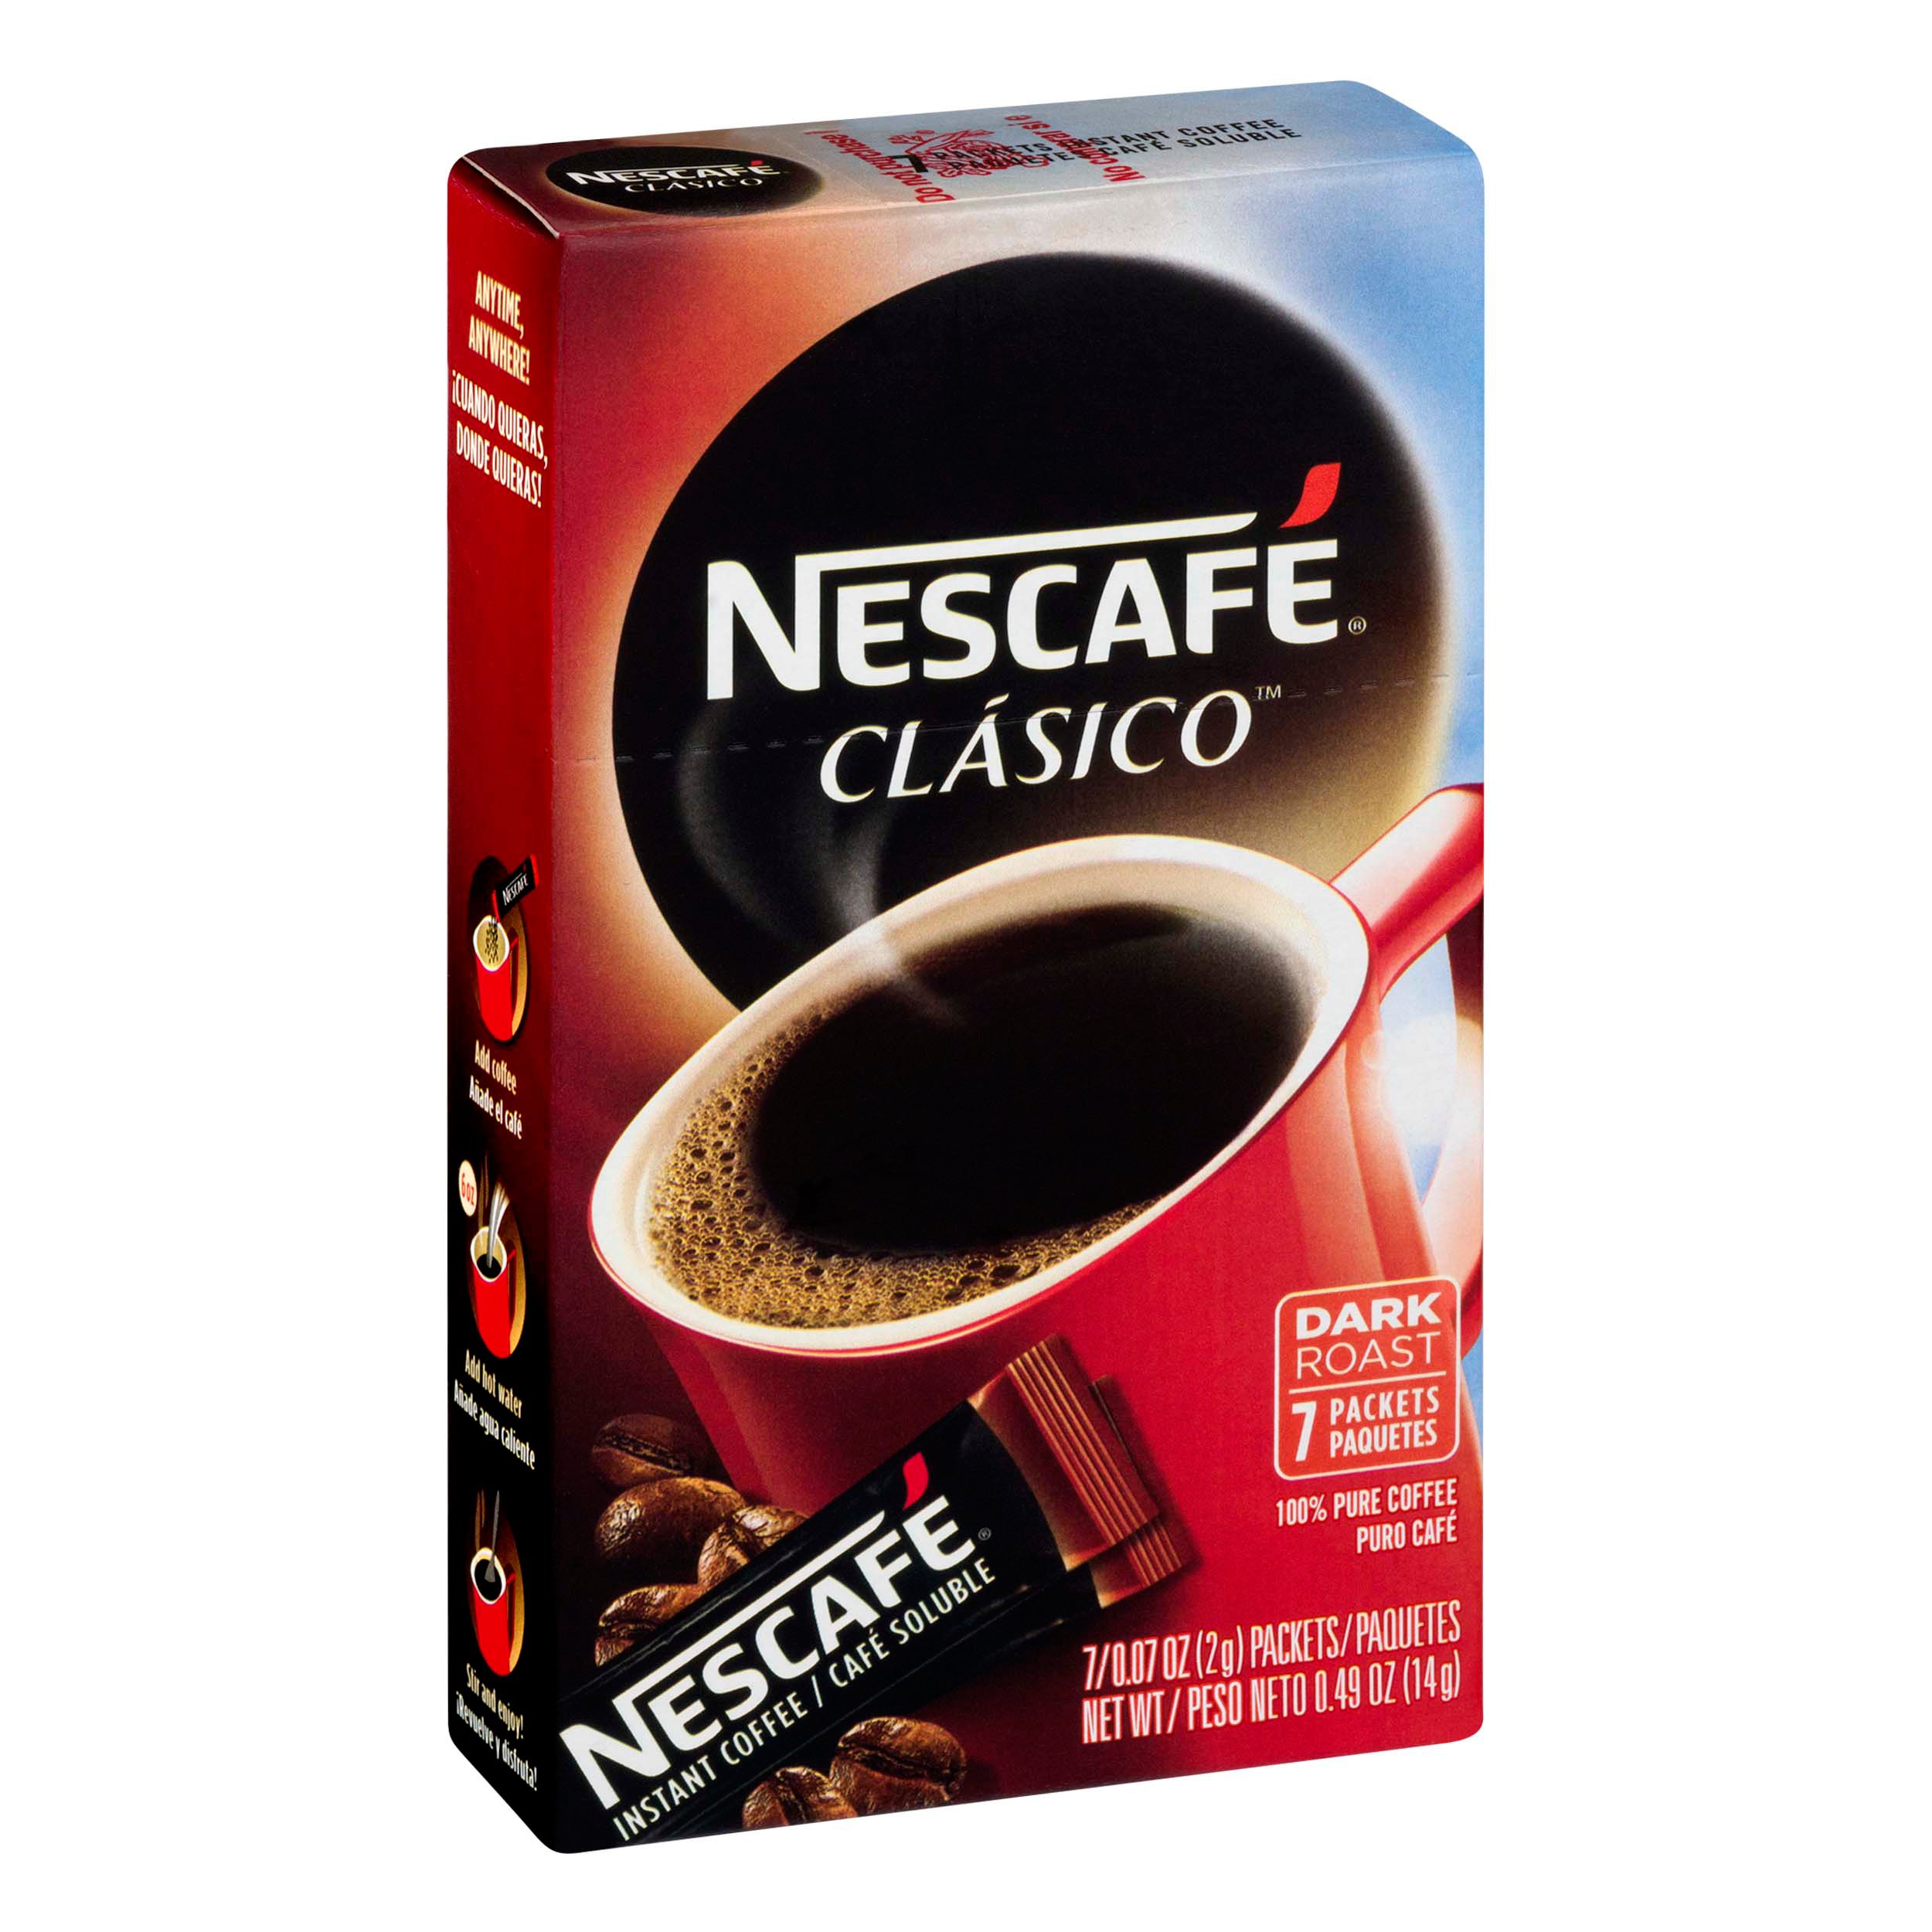 nescafe instant coffee